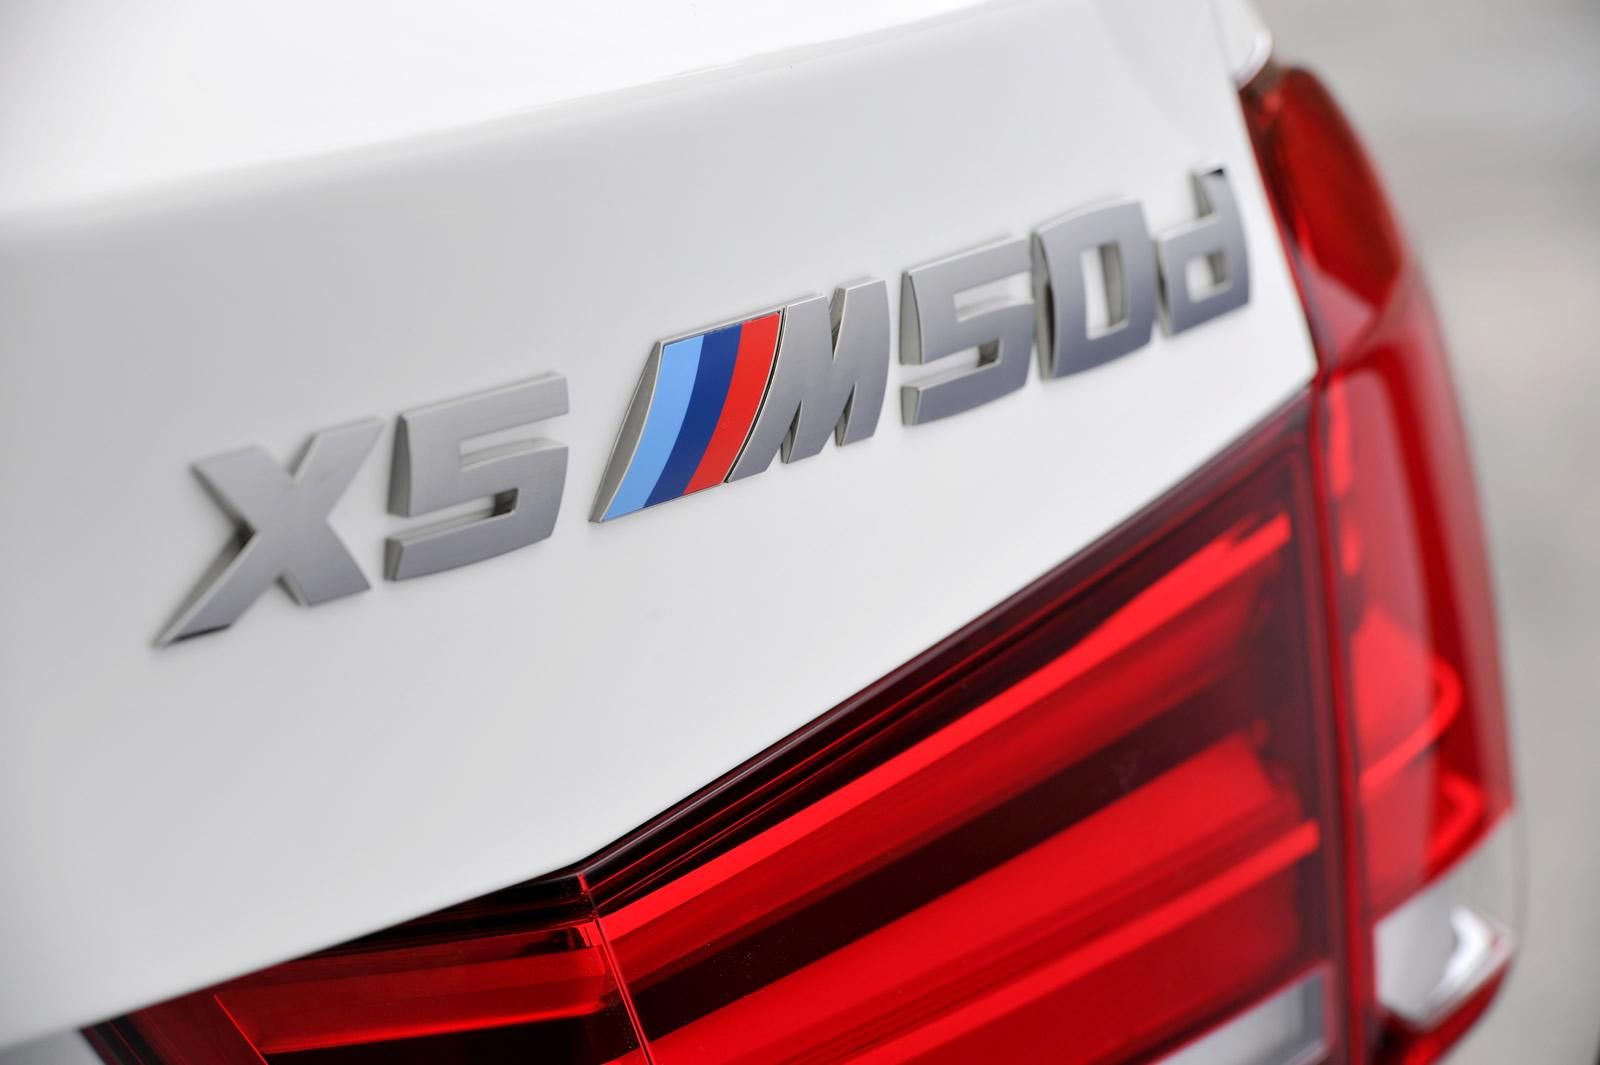 YEN BMW X5 M50d RESM GALERS